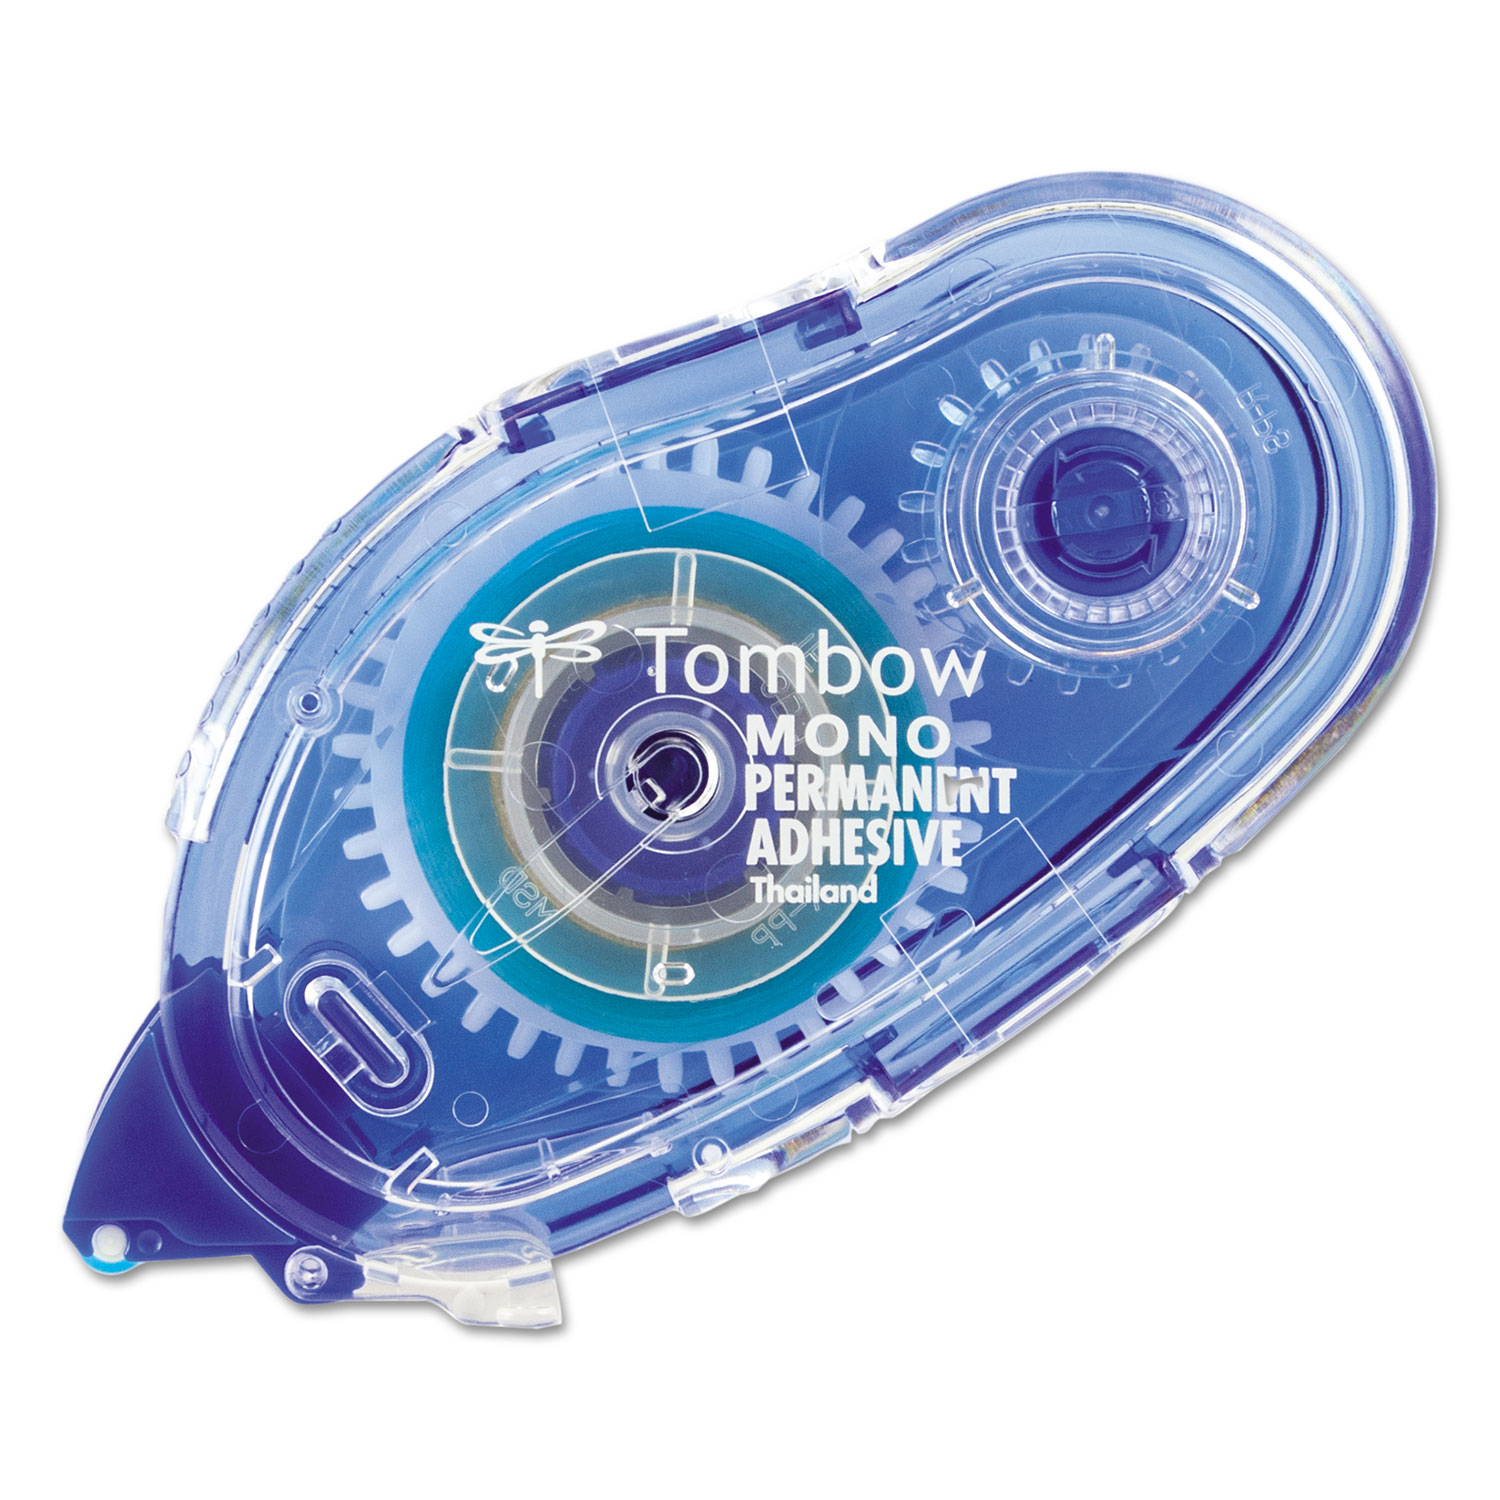  Tombow 62165 MONO Permanent Adhesive Applicator, 0.33 x 39.33 ft, Dries Light Blue (TOM62106) 